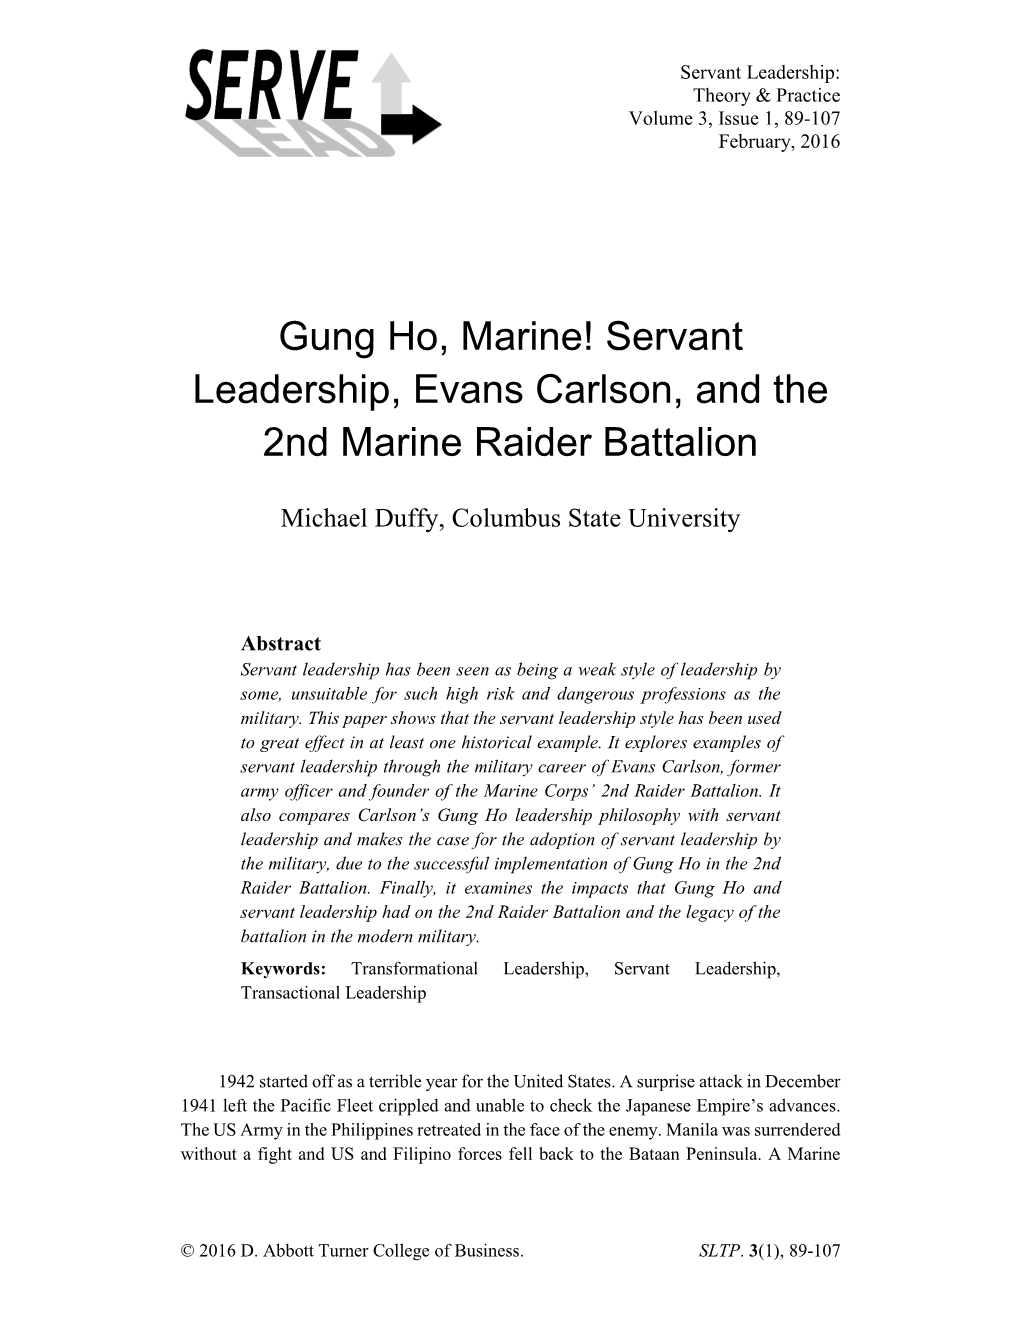 Gung Ho, Marine! Servant Leadership, Evans Carlson, and the 2Nd Marine Raider Battalion